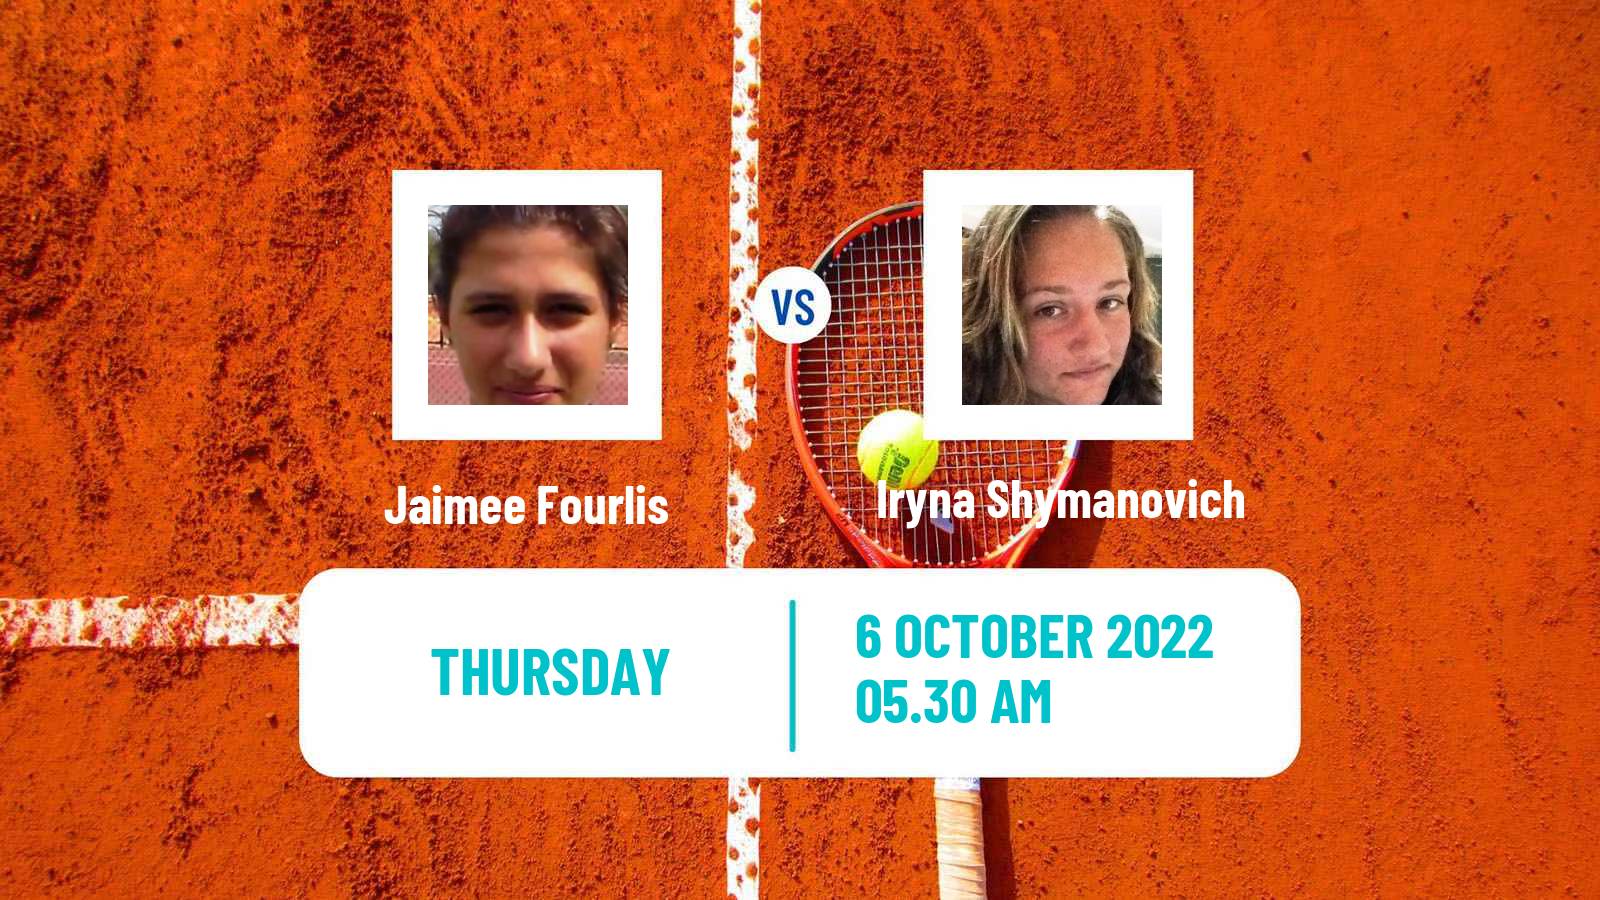 Tennis ITF Tournaments Jaimee Fourlis - Iryna Shymanovich